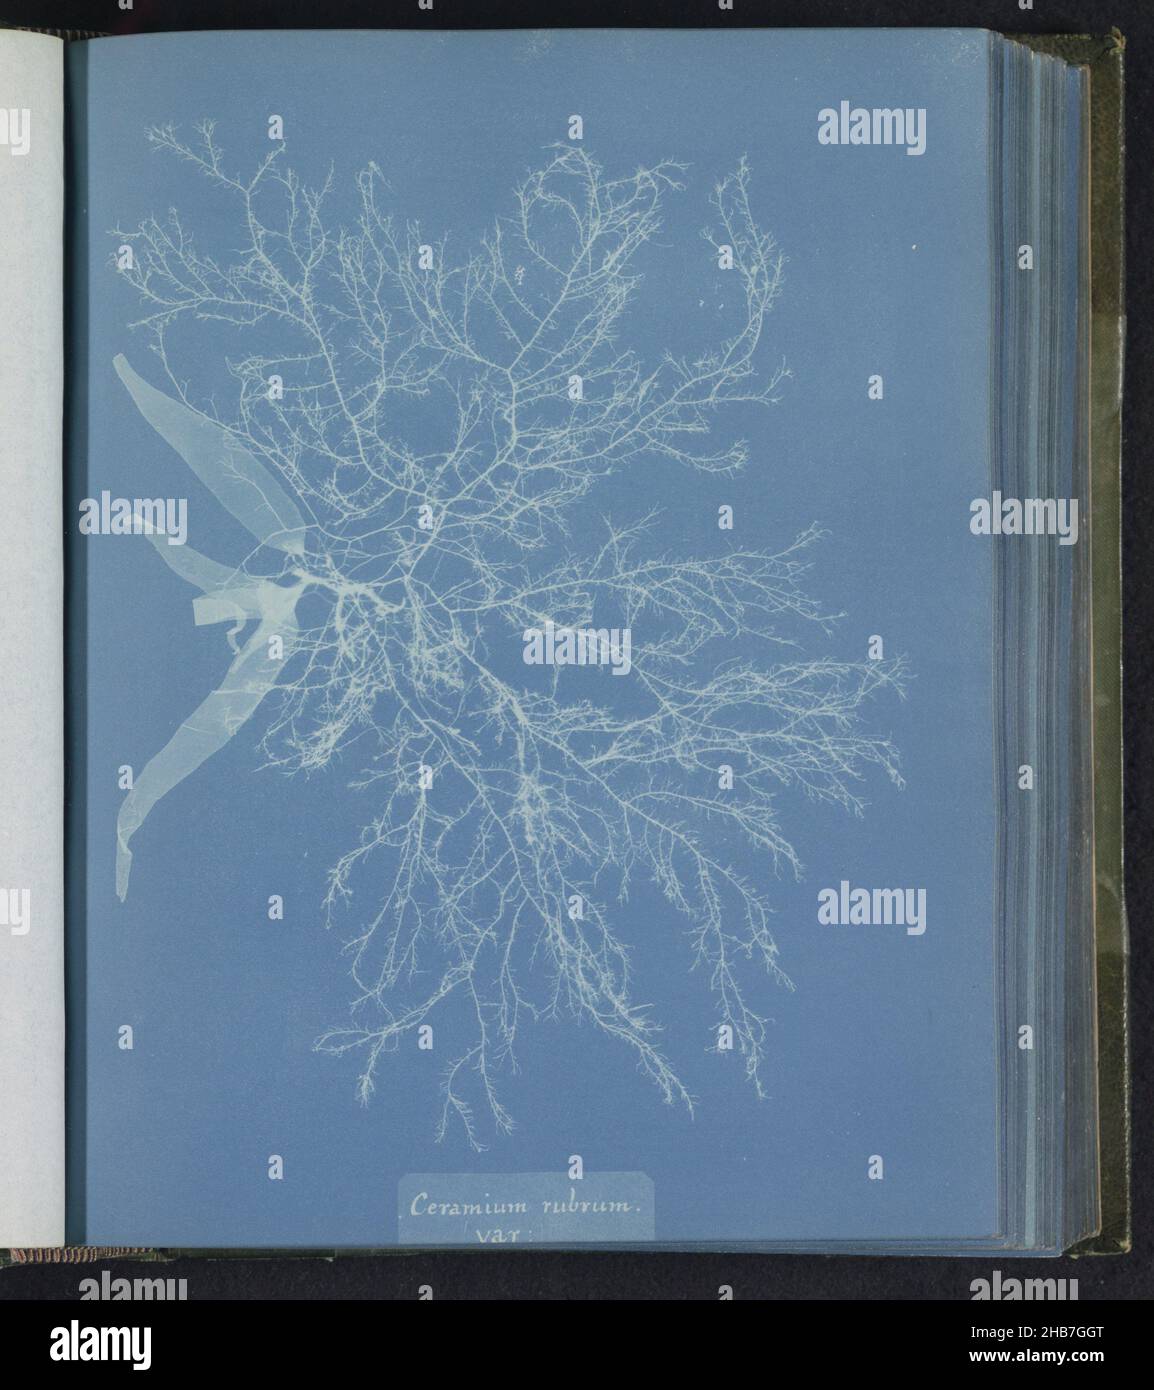 Ceramium rubrum, var., Anna Atkins, United Kingdom, c. 1843 - c. 1853, photographic support, cyanotype, height 250 mm × width 200 mm Stock Photo